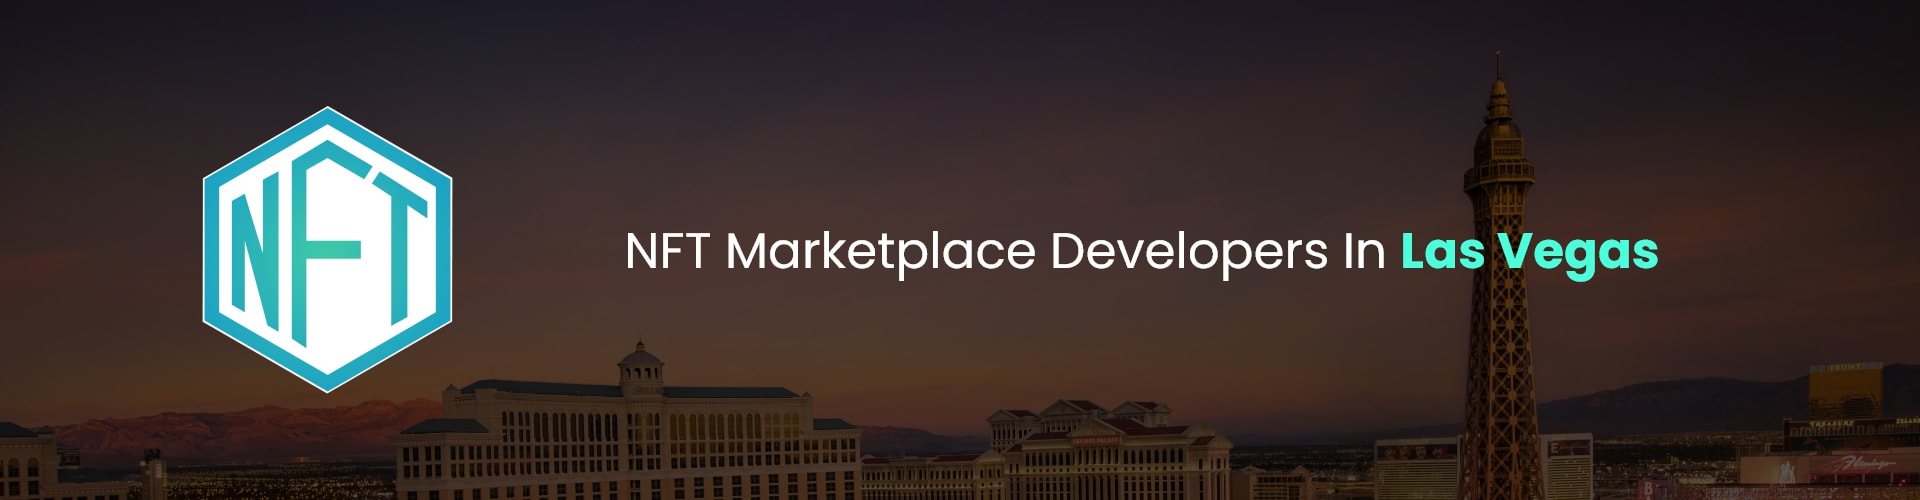 hire nft marketplace developers in las vegas